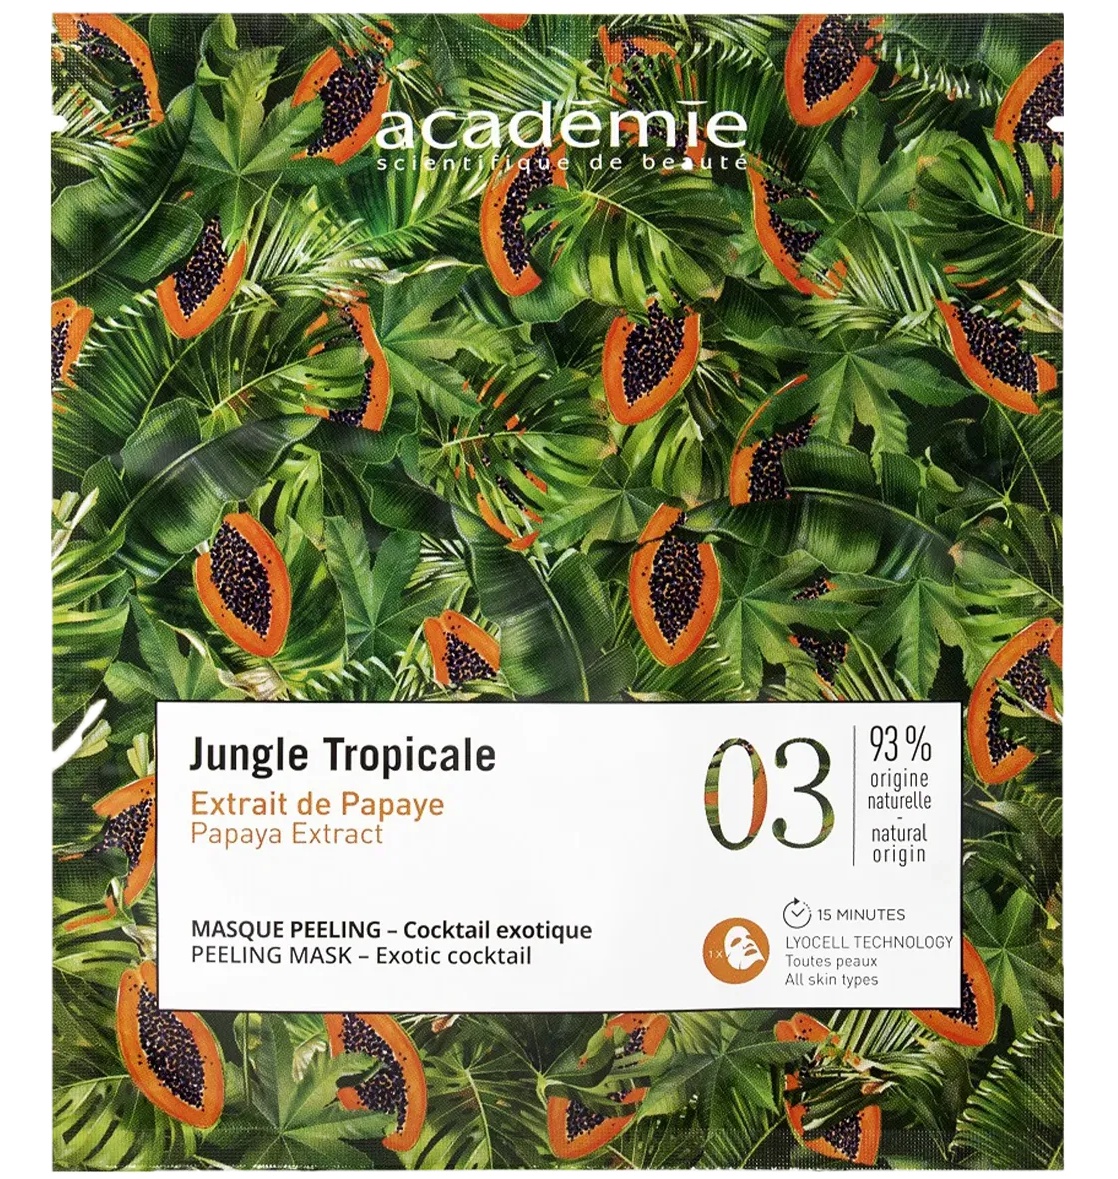 Academie Jungle Tropicale Peeling Mask Exotic Cocktail